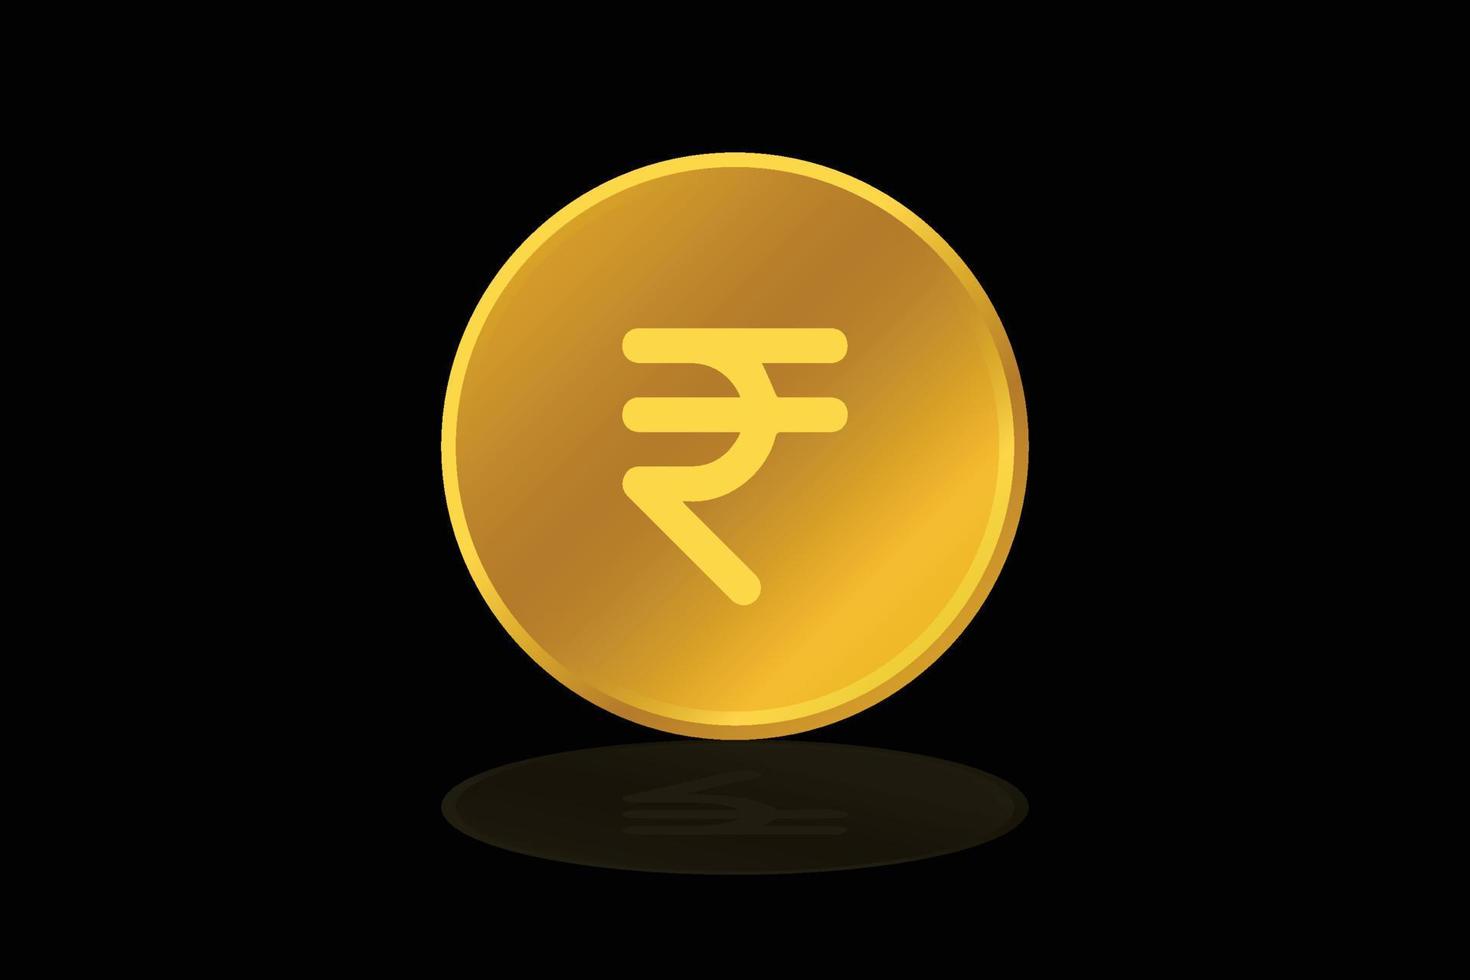 vettore oro moneta India rupia inr moneta i soldi icona cartello o simbolo